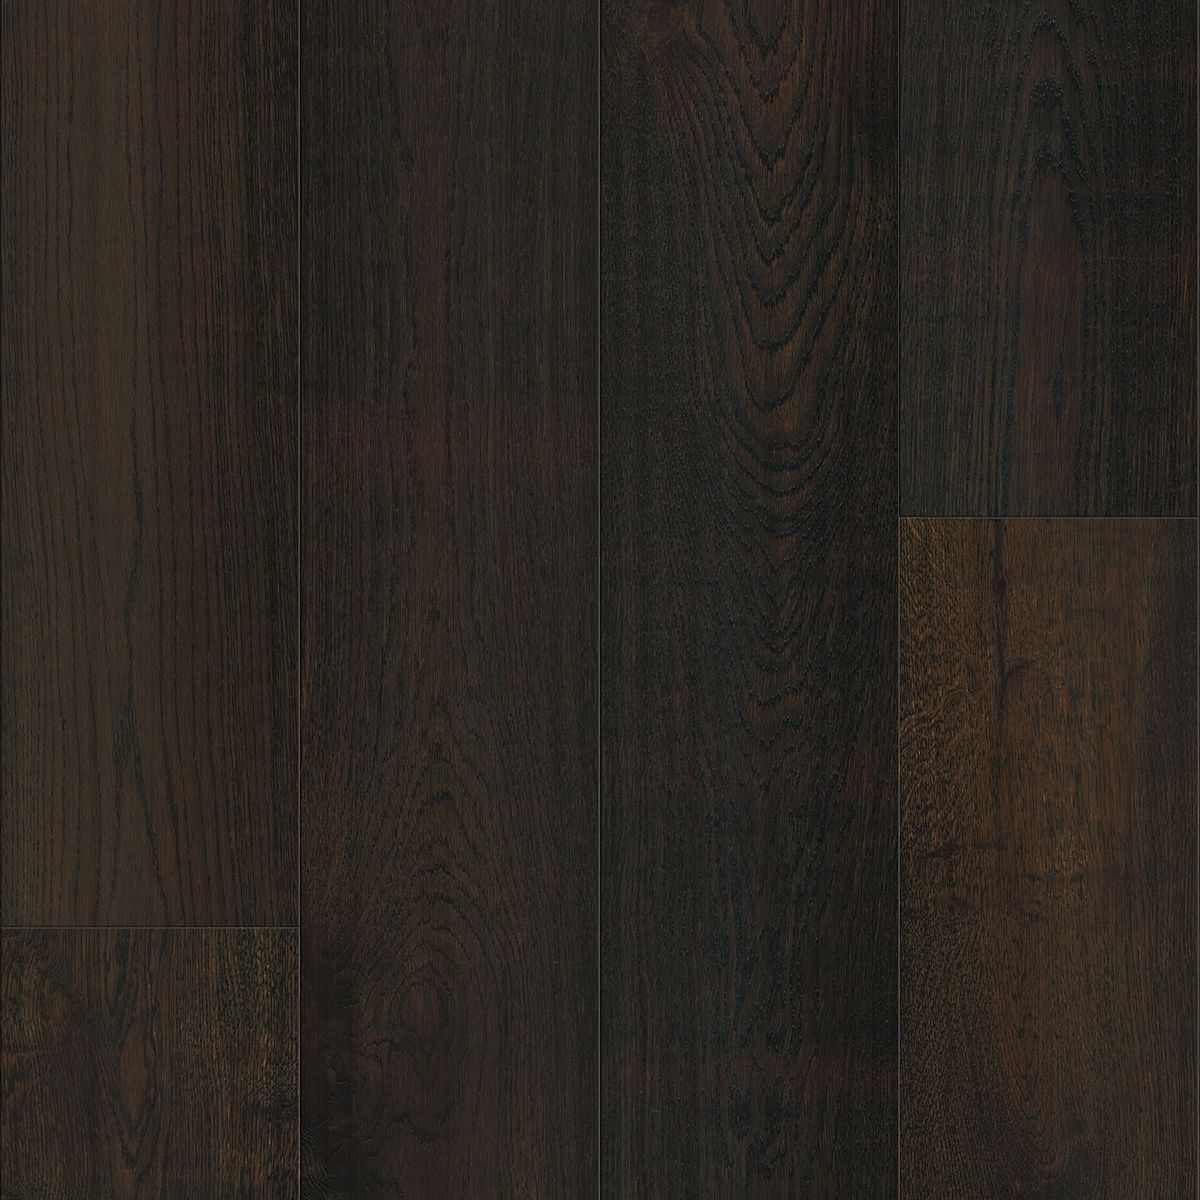 Cali Hardwood Syrah Oak, Meritage Hardwood Flooring Reviews